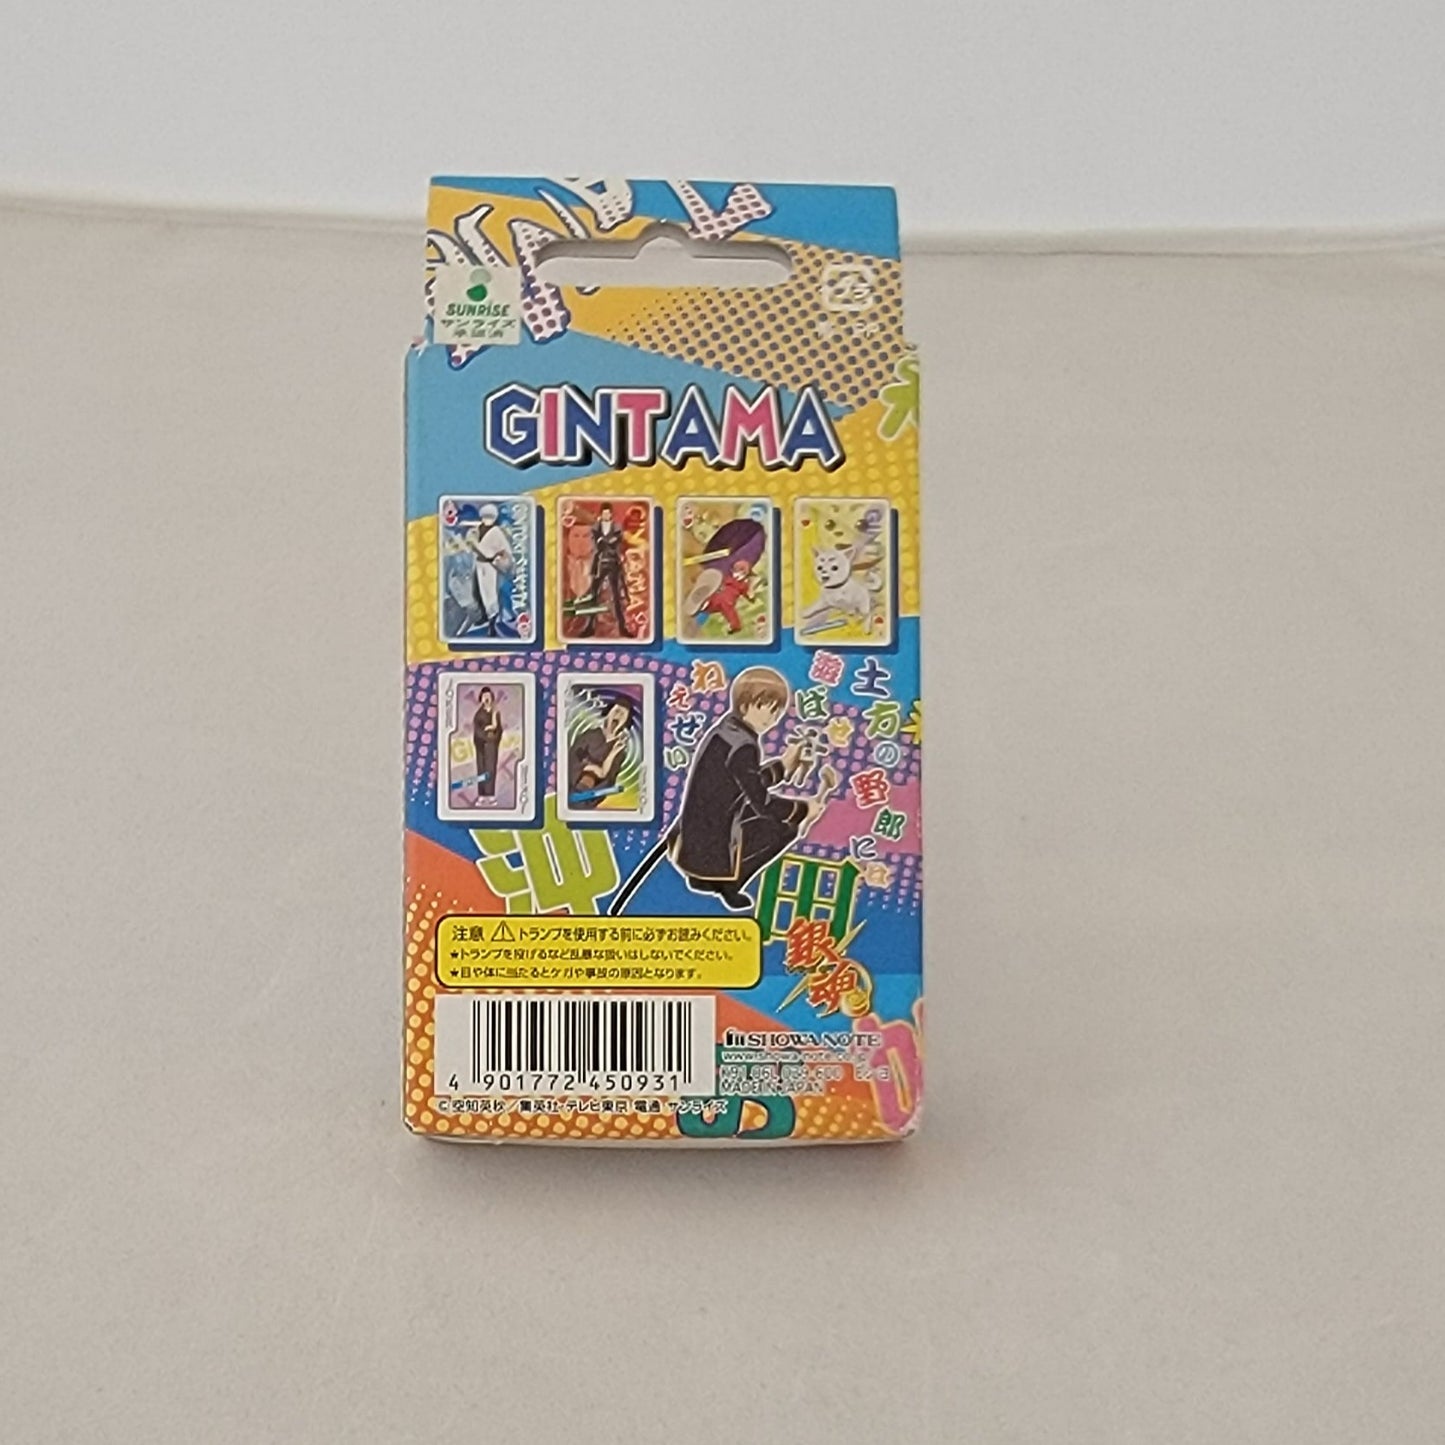 Gintama Anime Original Playing Cards